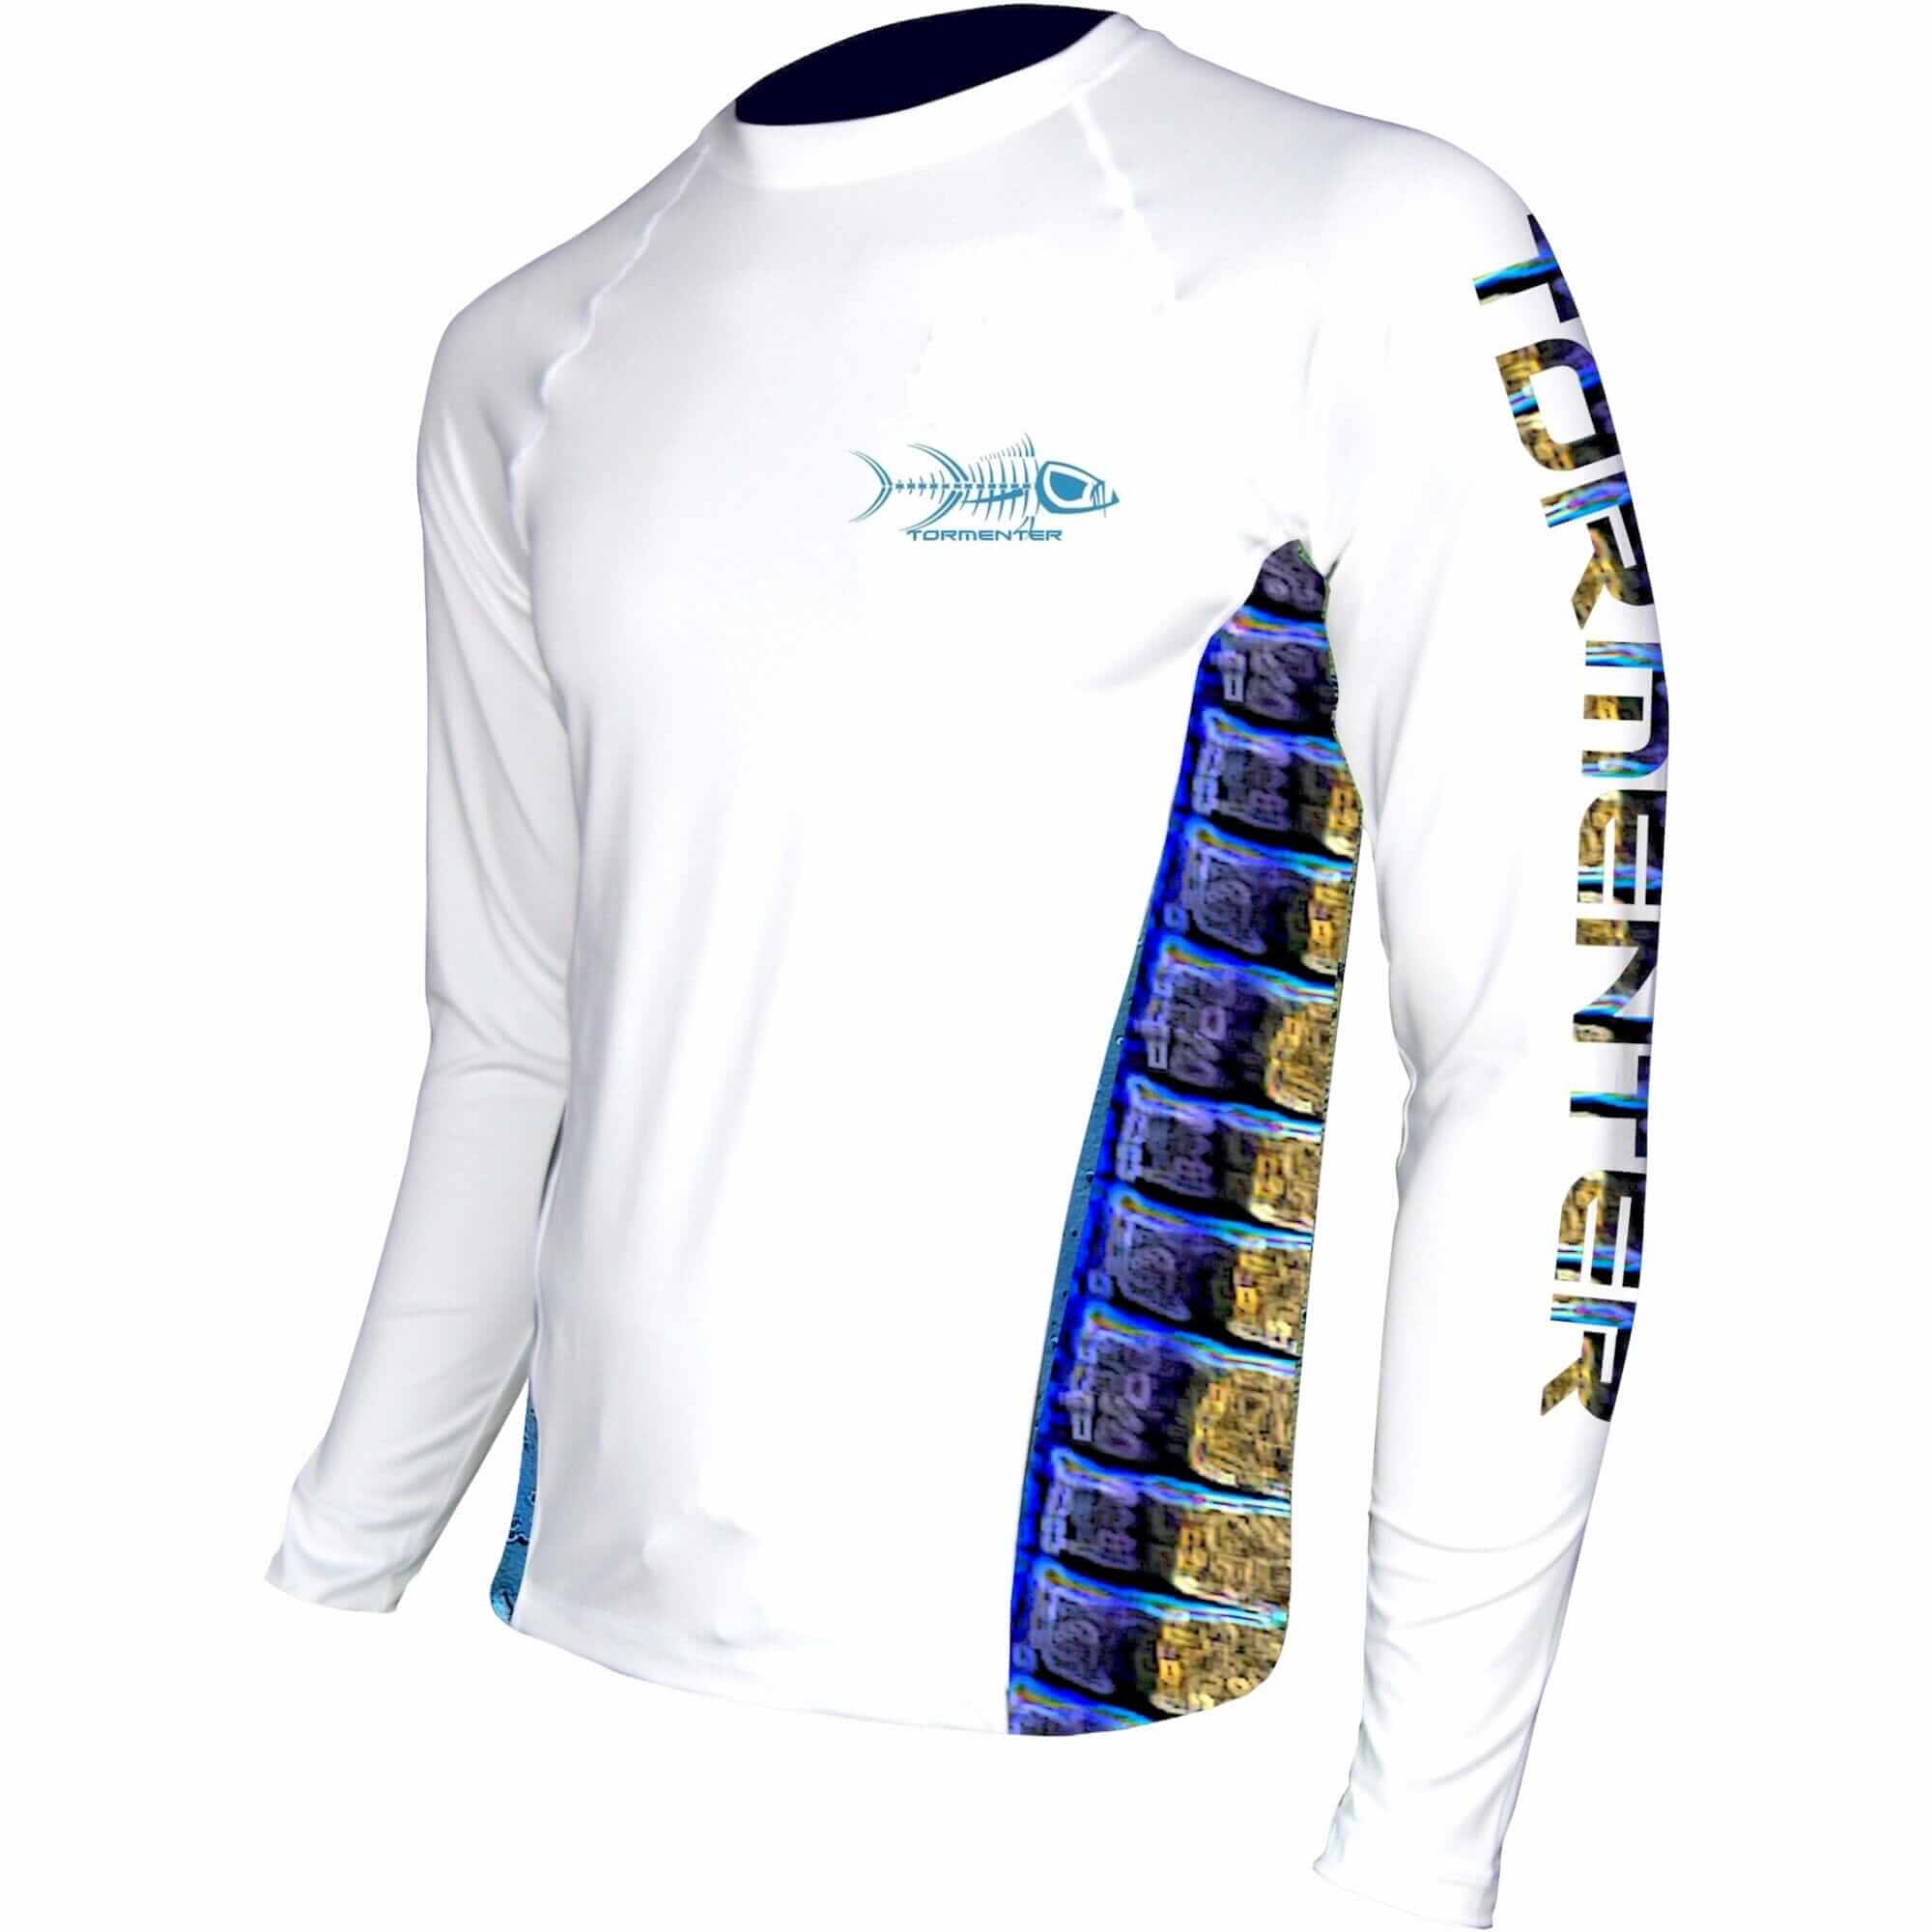 Marlin Side Venting Performance Shirt